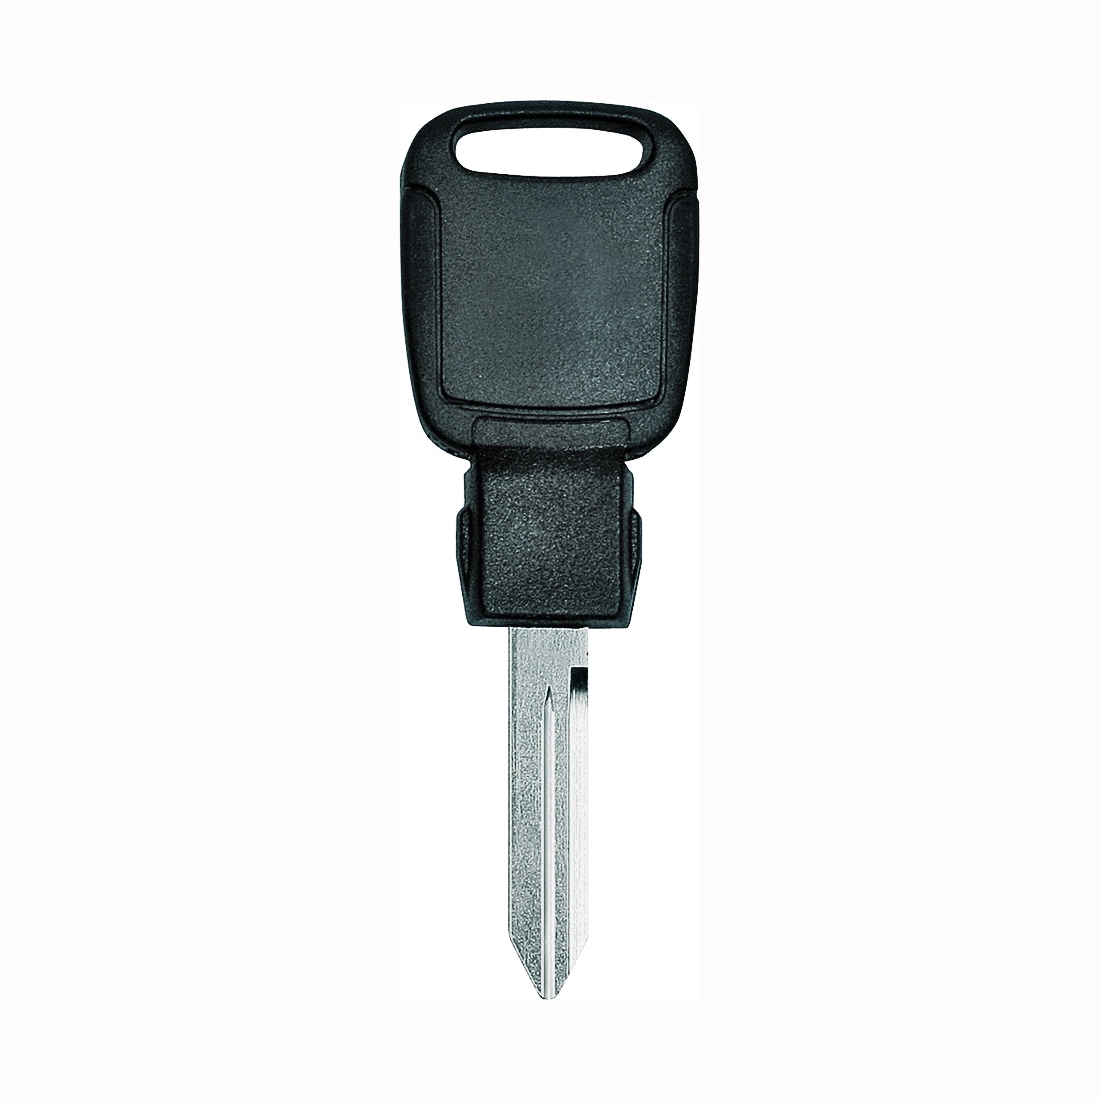 18CHRY301 Automotive Key Blank, Brass, Nickel, For: Chrysler Vehicle Locks